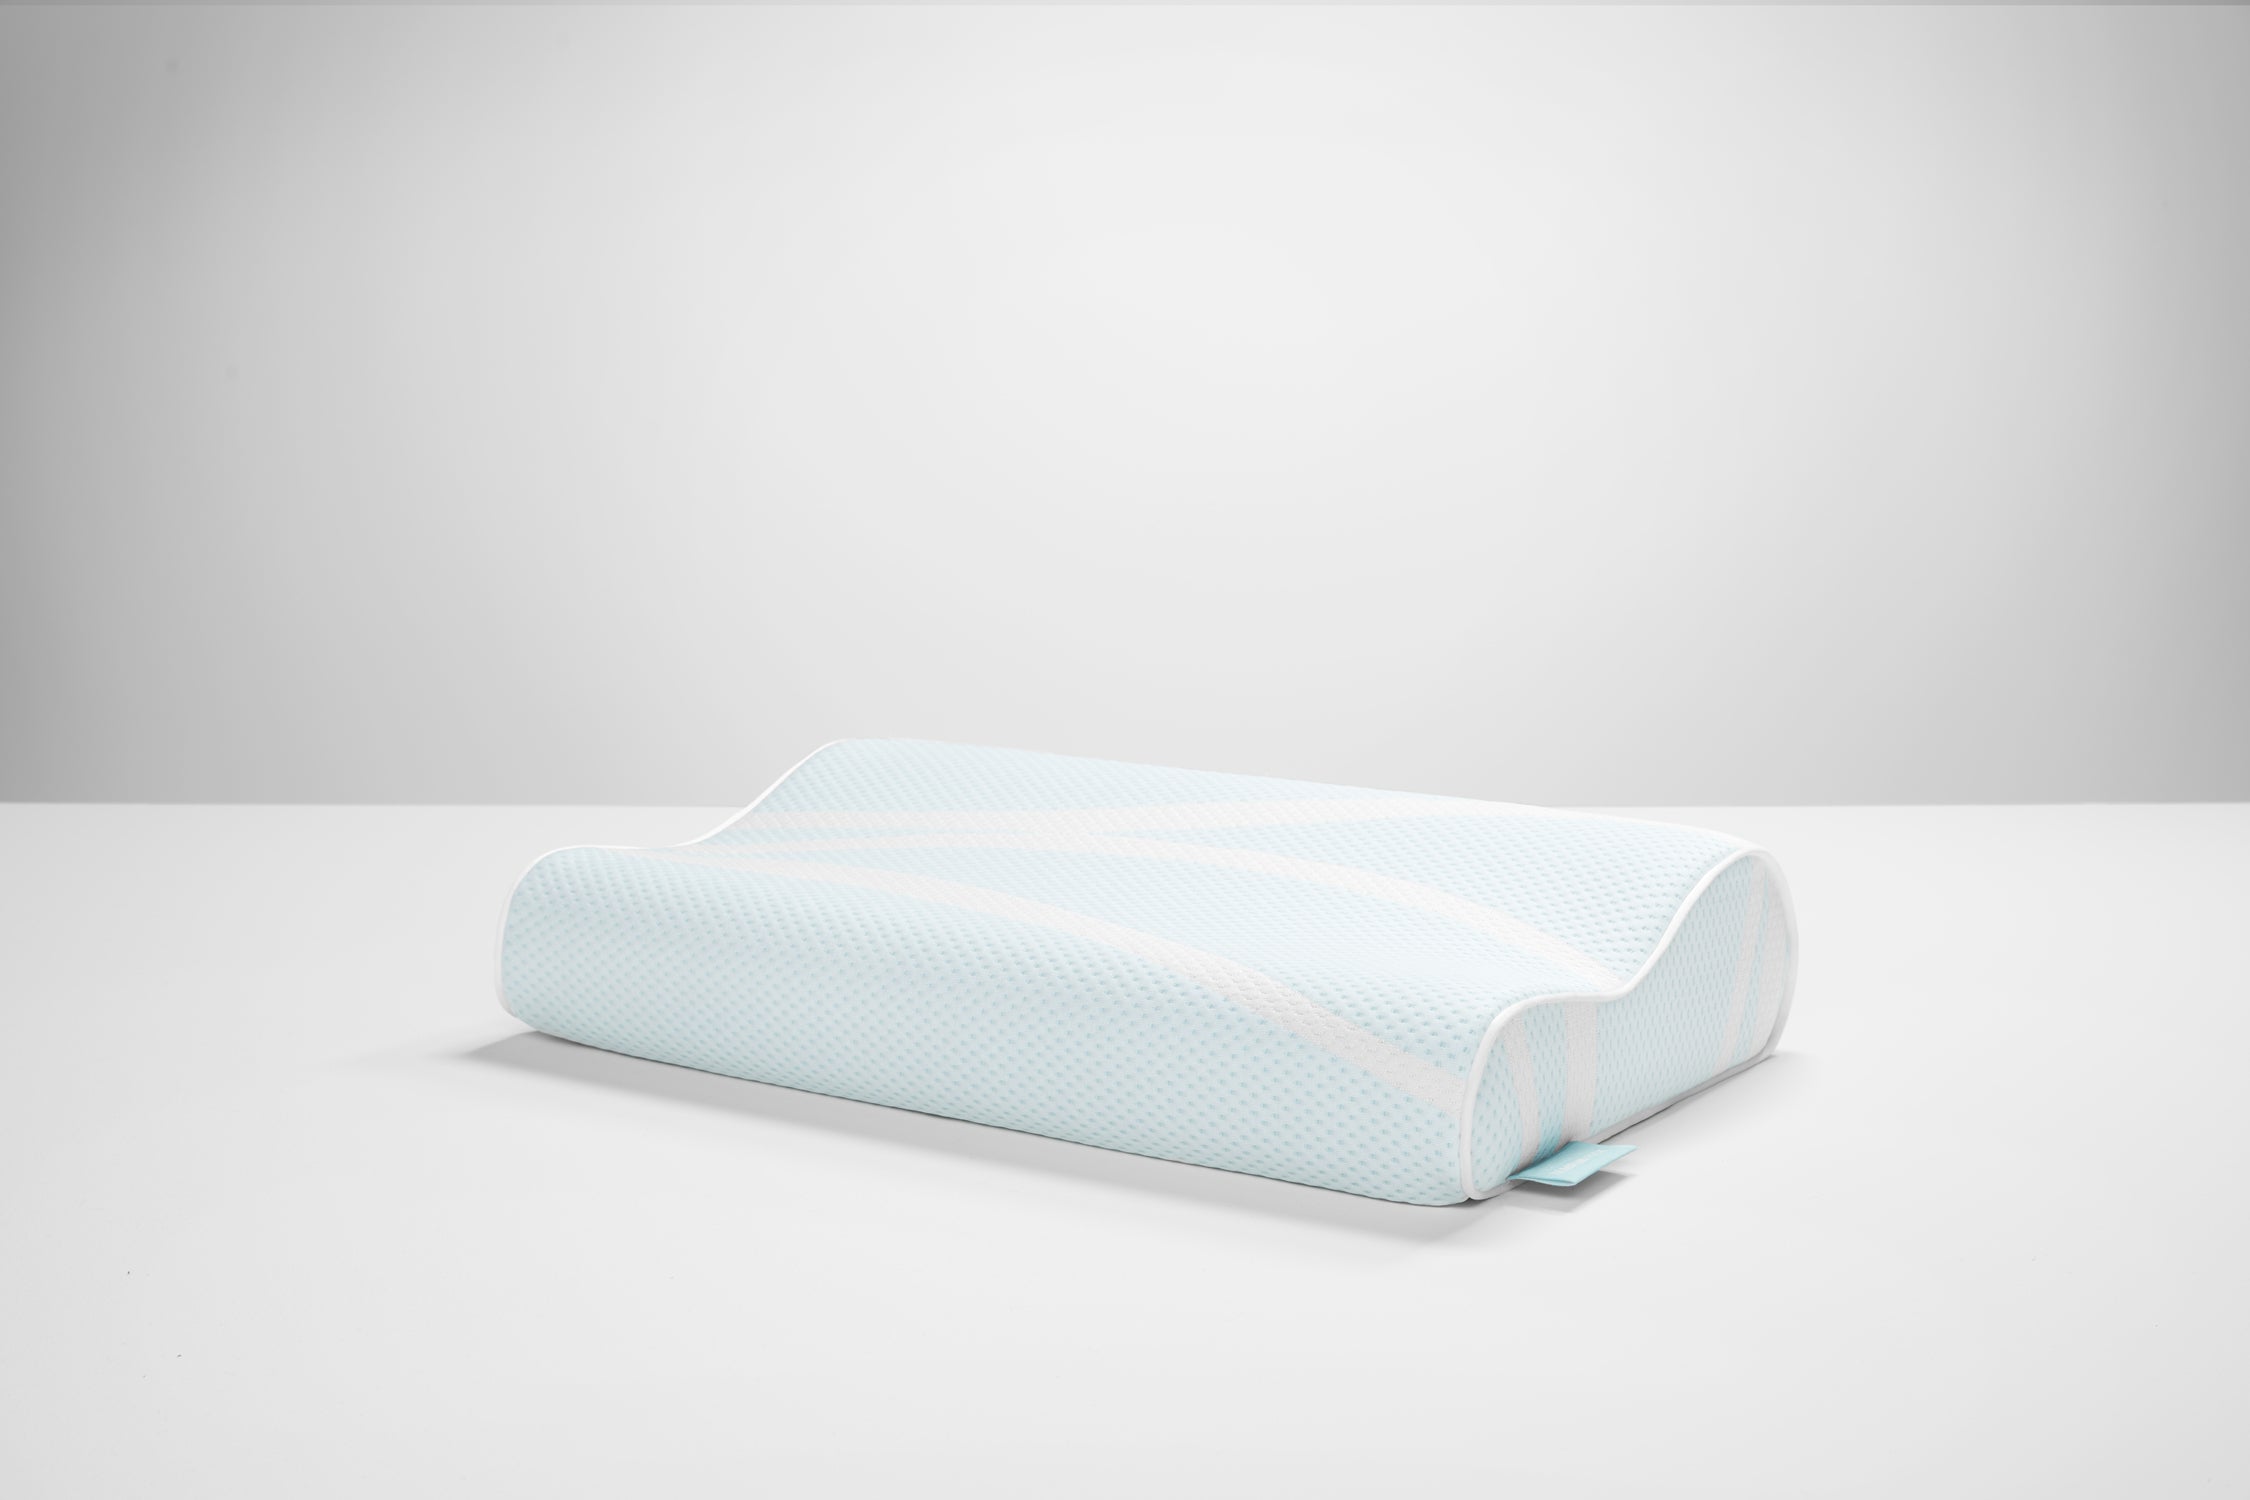 TEMPUR-Ergo Cooling Neck Pillow